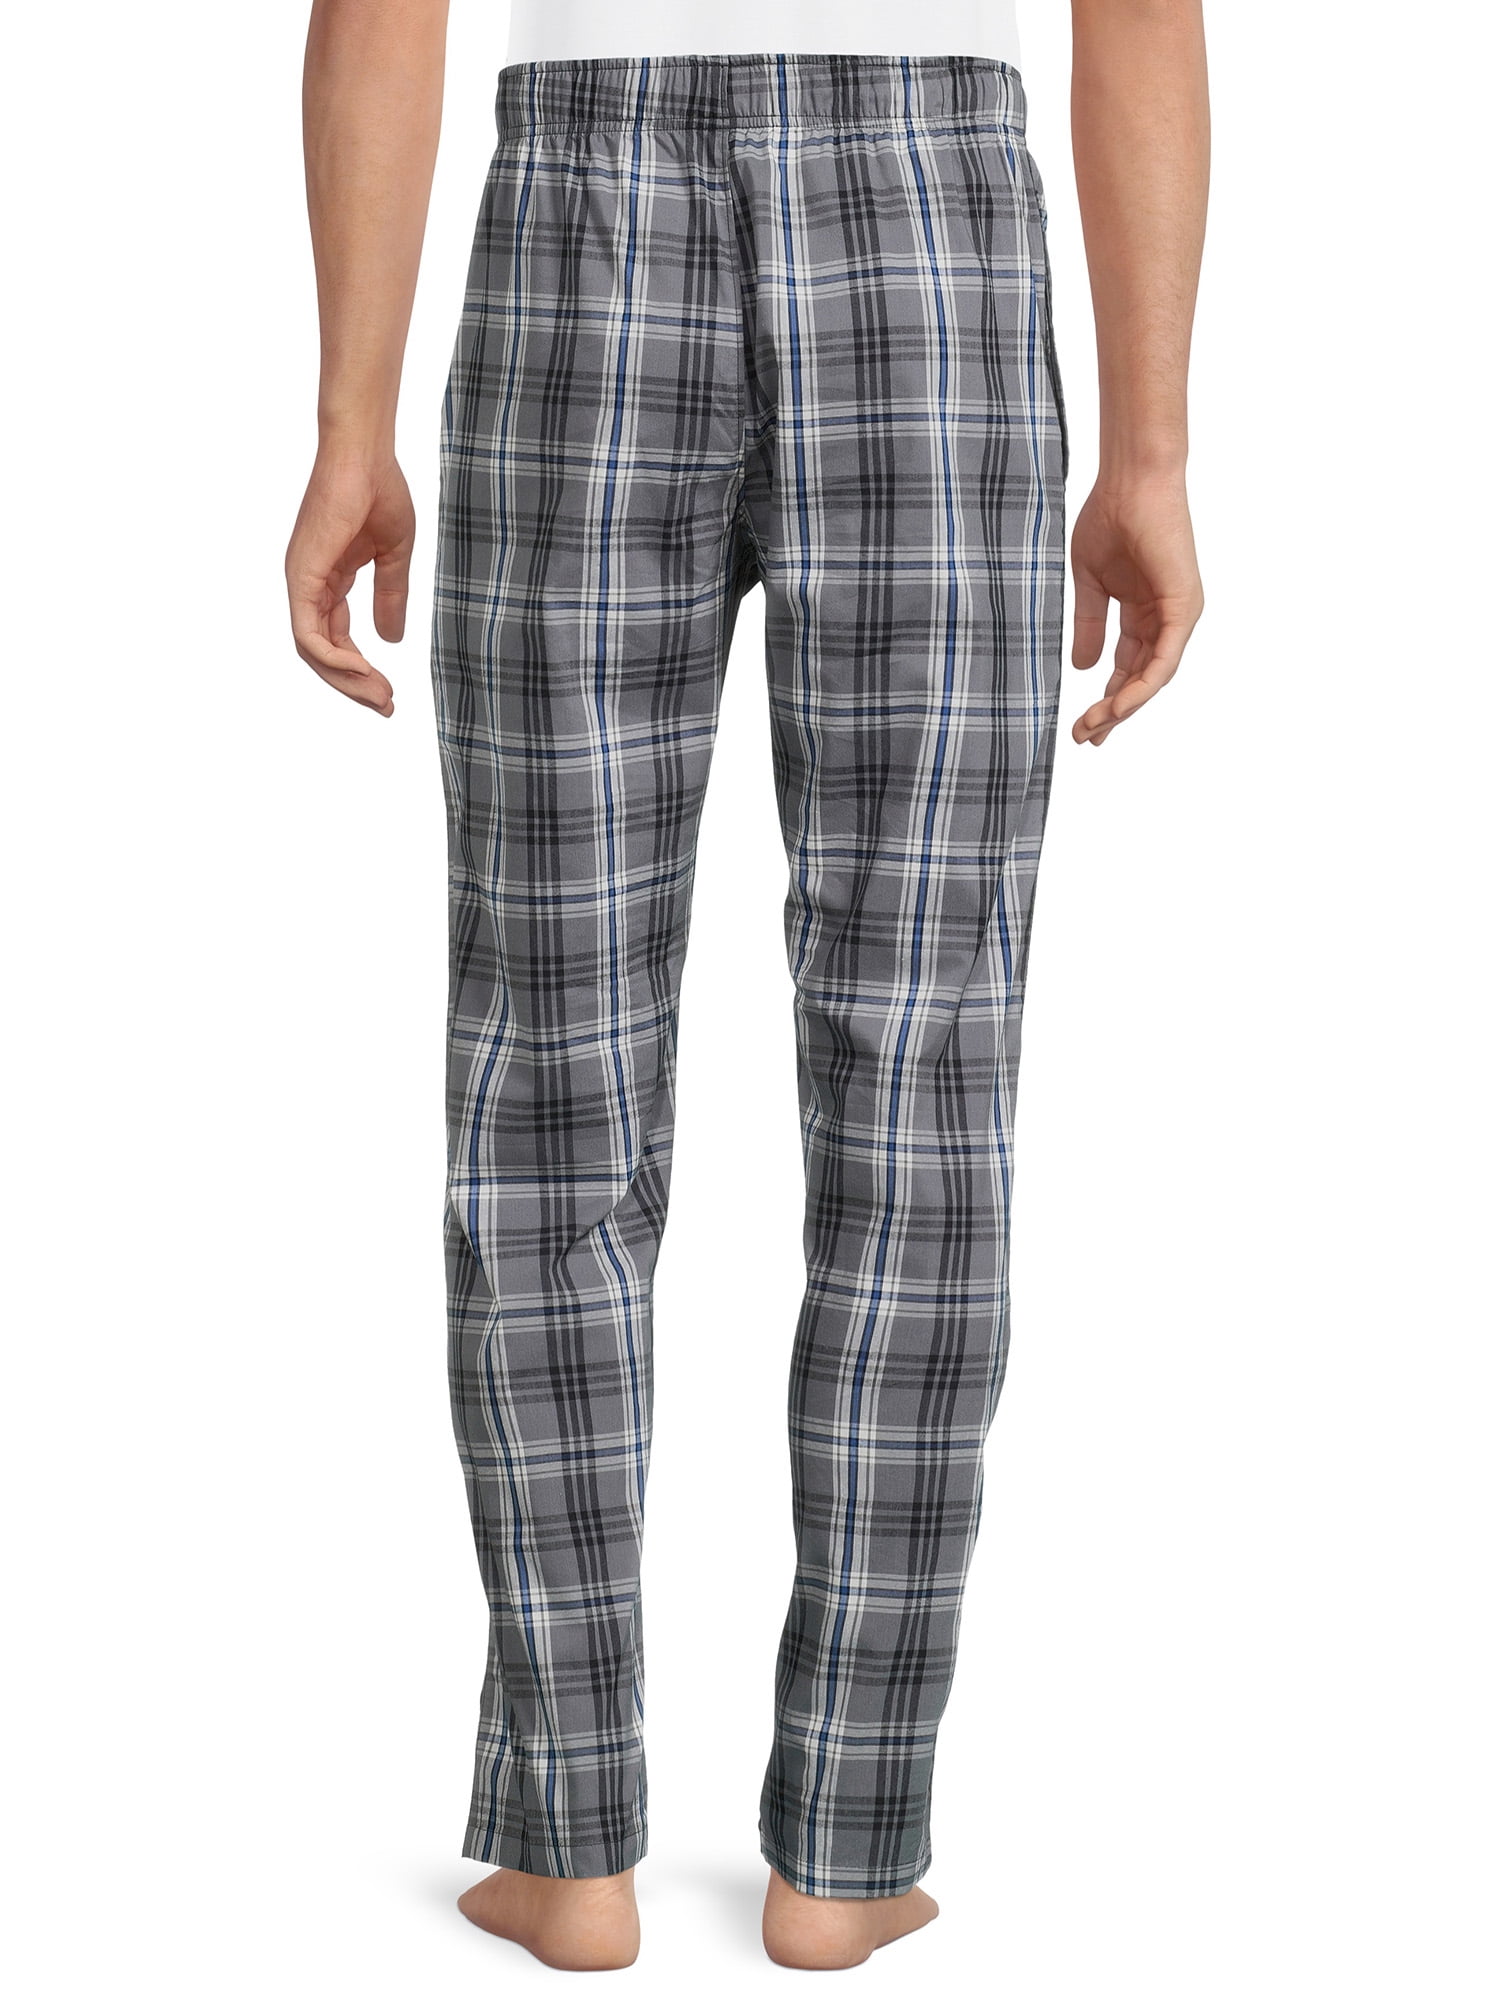 Hanes Men\'s Woven Sleep Pants, S-2XL Size